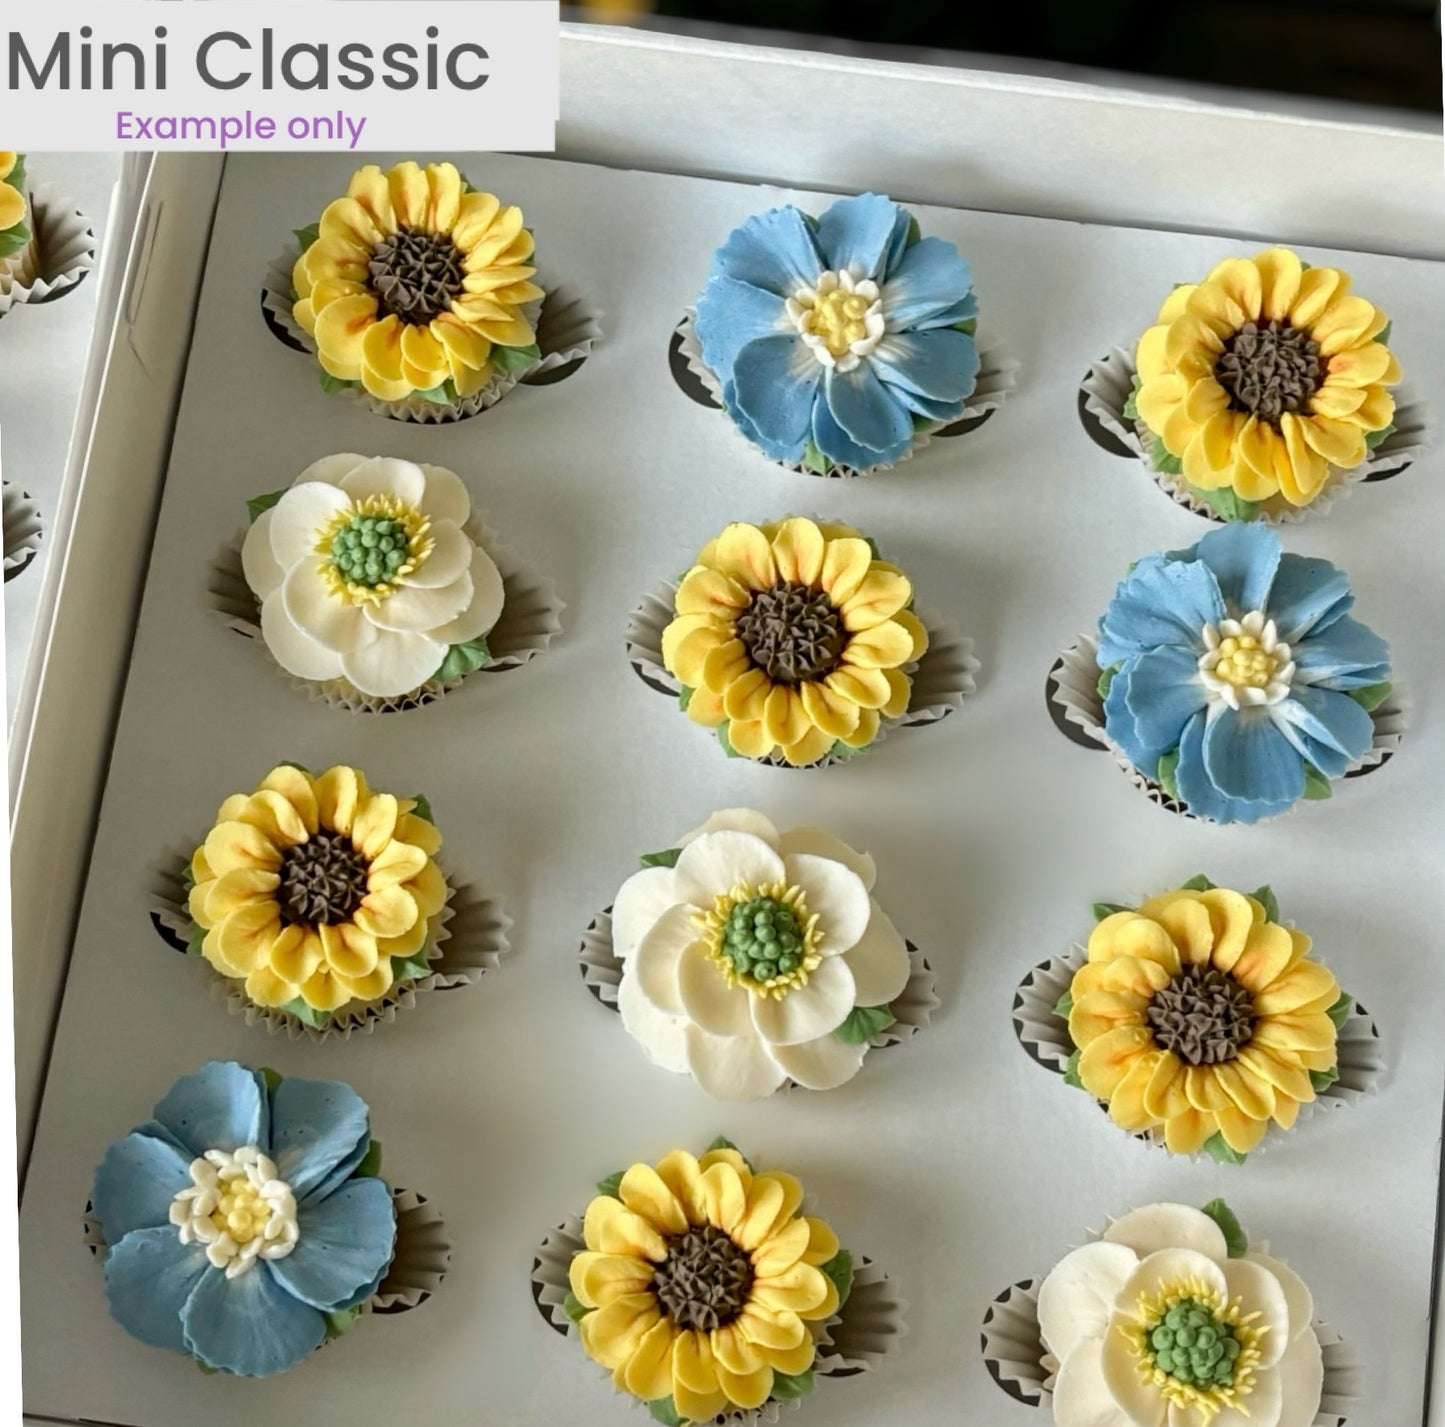 Florals MINI Boxed 12-Count - CLASSIC